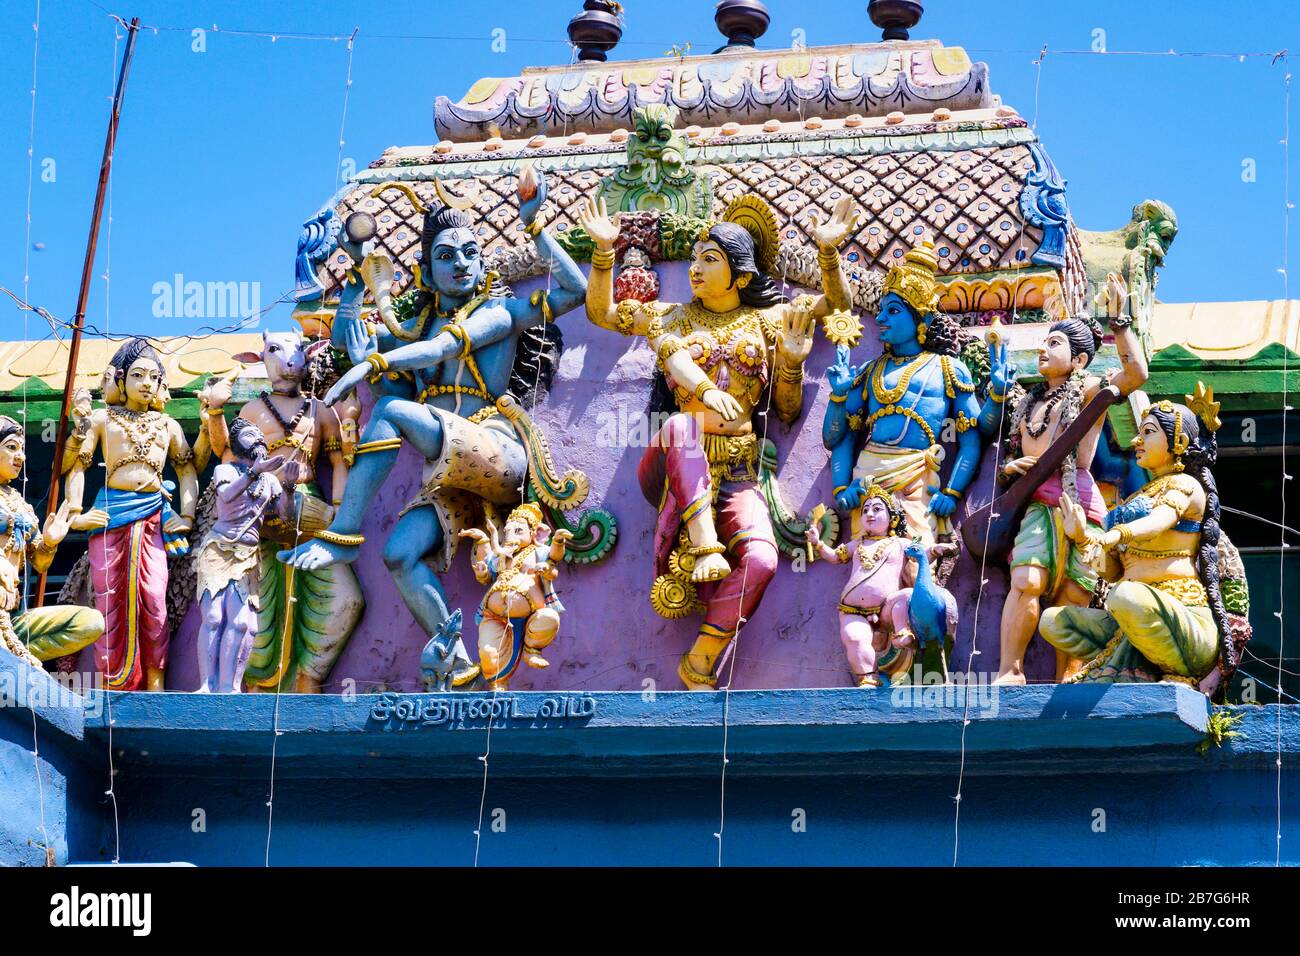 South Asia Sri Lanka Matale Sri Muthumariamman Thevasthanam Hindu Temple built 1874 ornate colourful figures gods roof detail Stock Photo